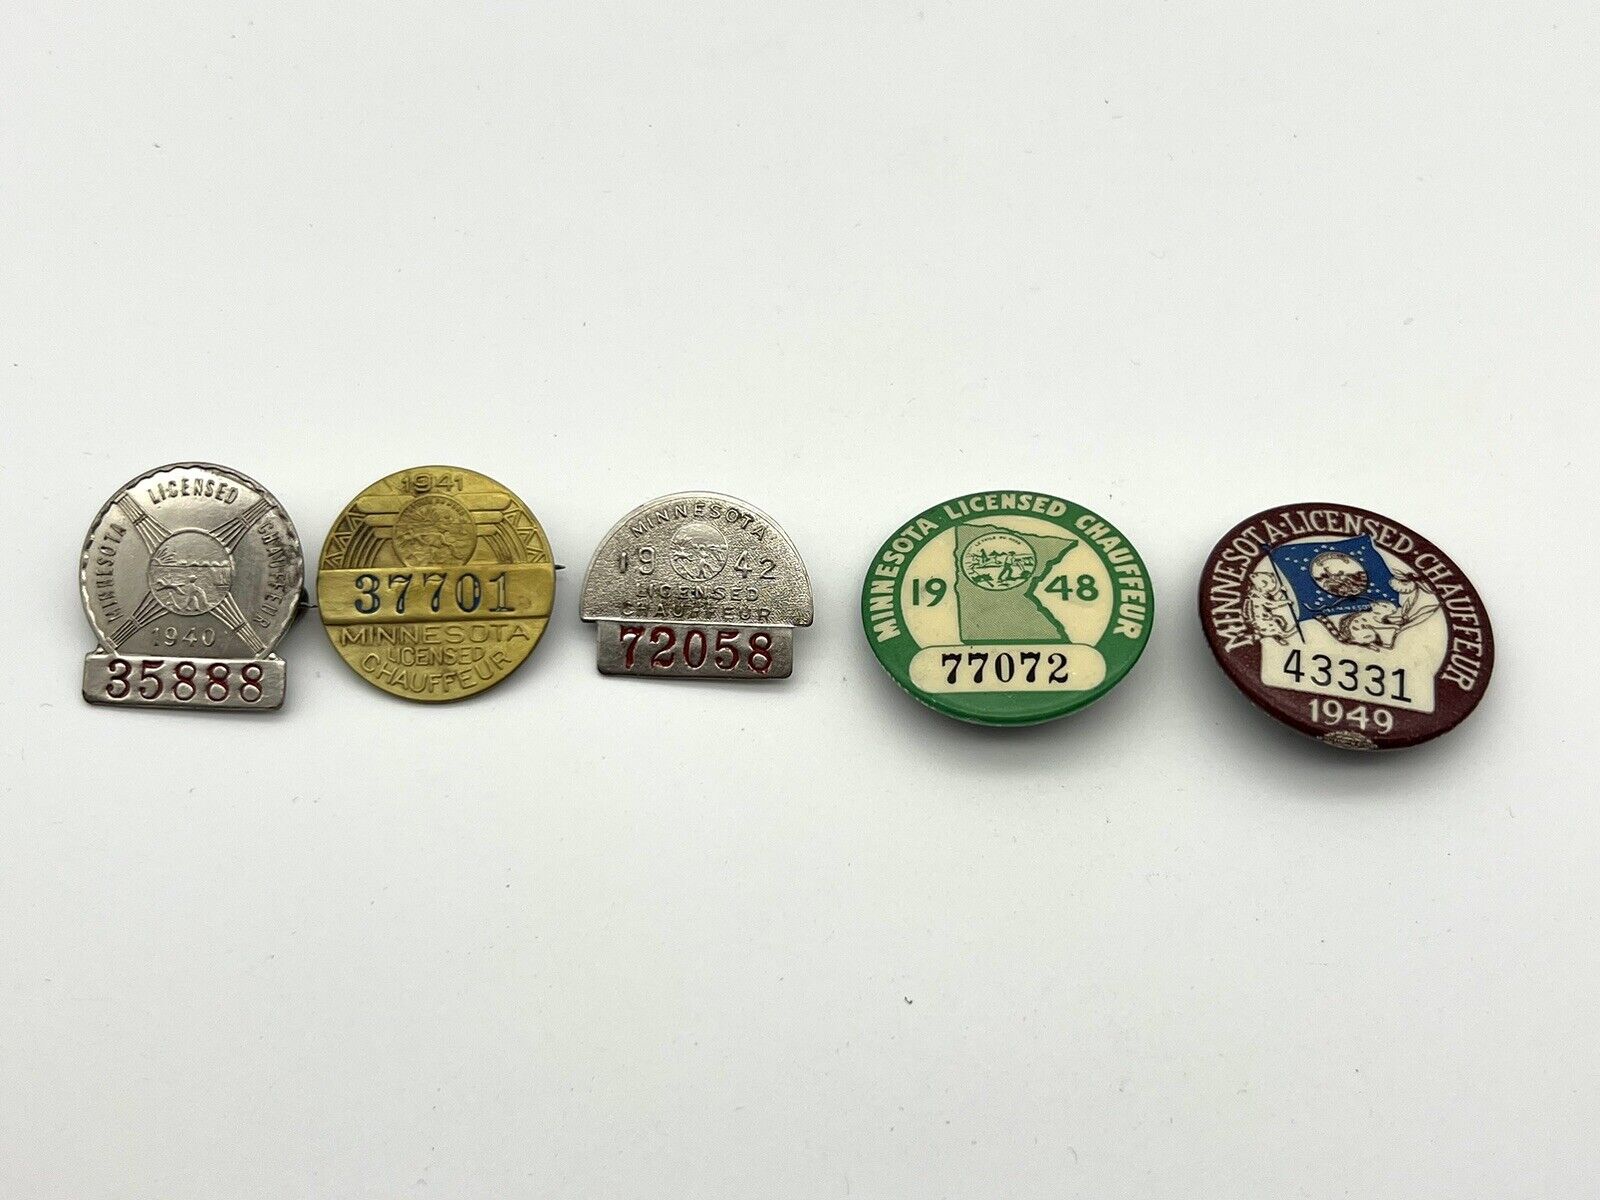 Vintage Minnesota Chauffer Pins 1940s. Lot of 5